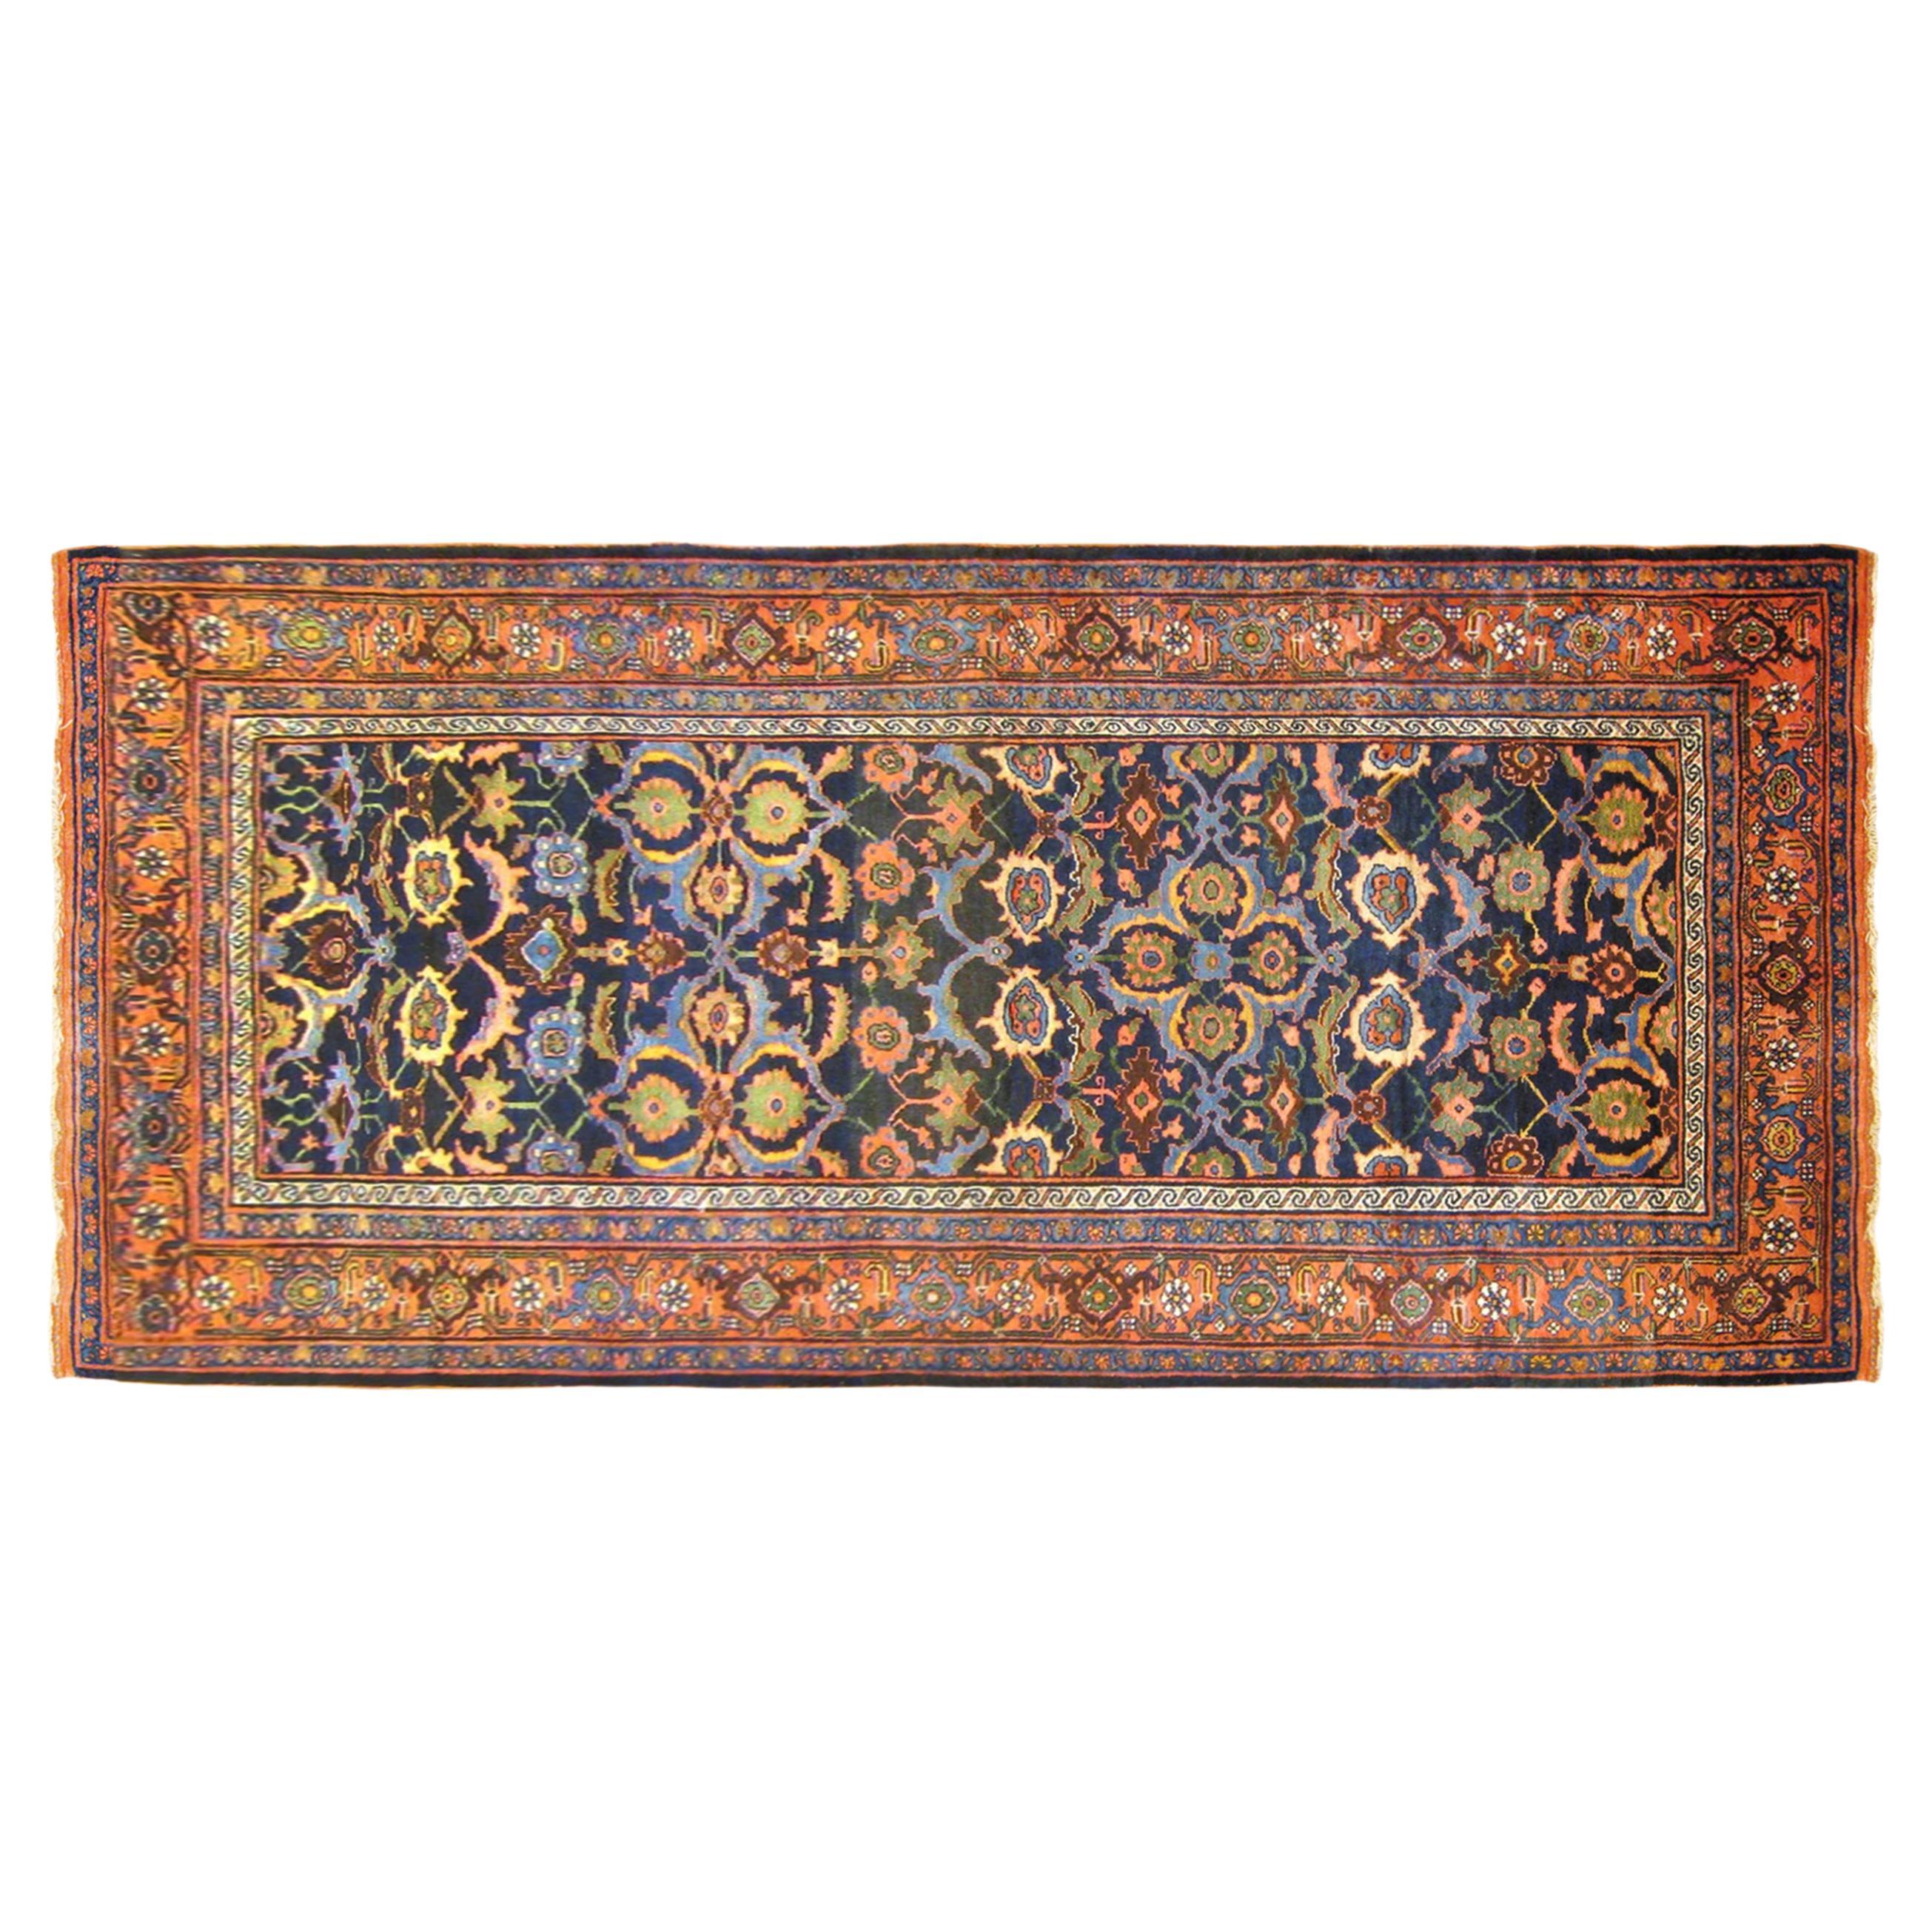 Antique Persian Bidjar Oriental Rug, in Runner Size, with Floral Elements